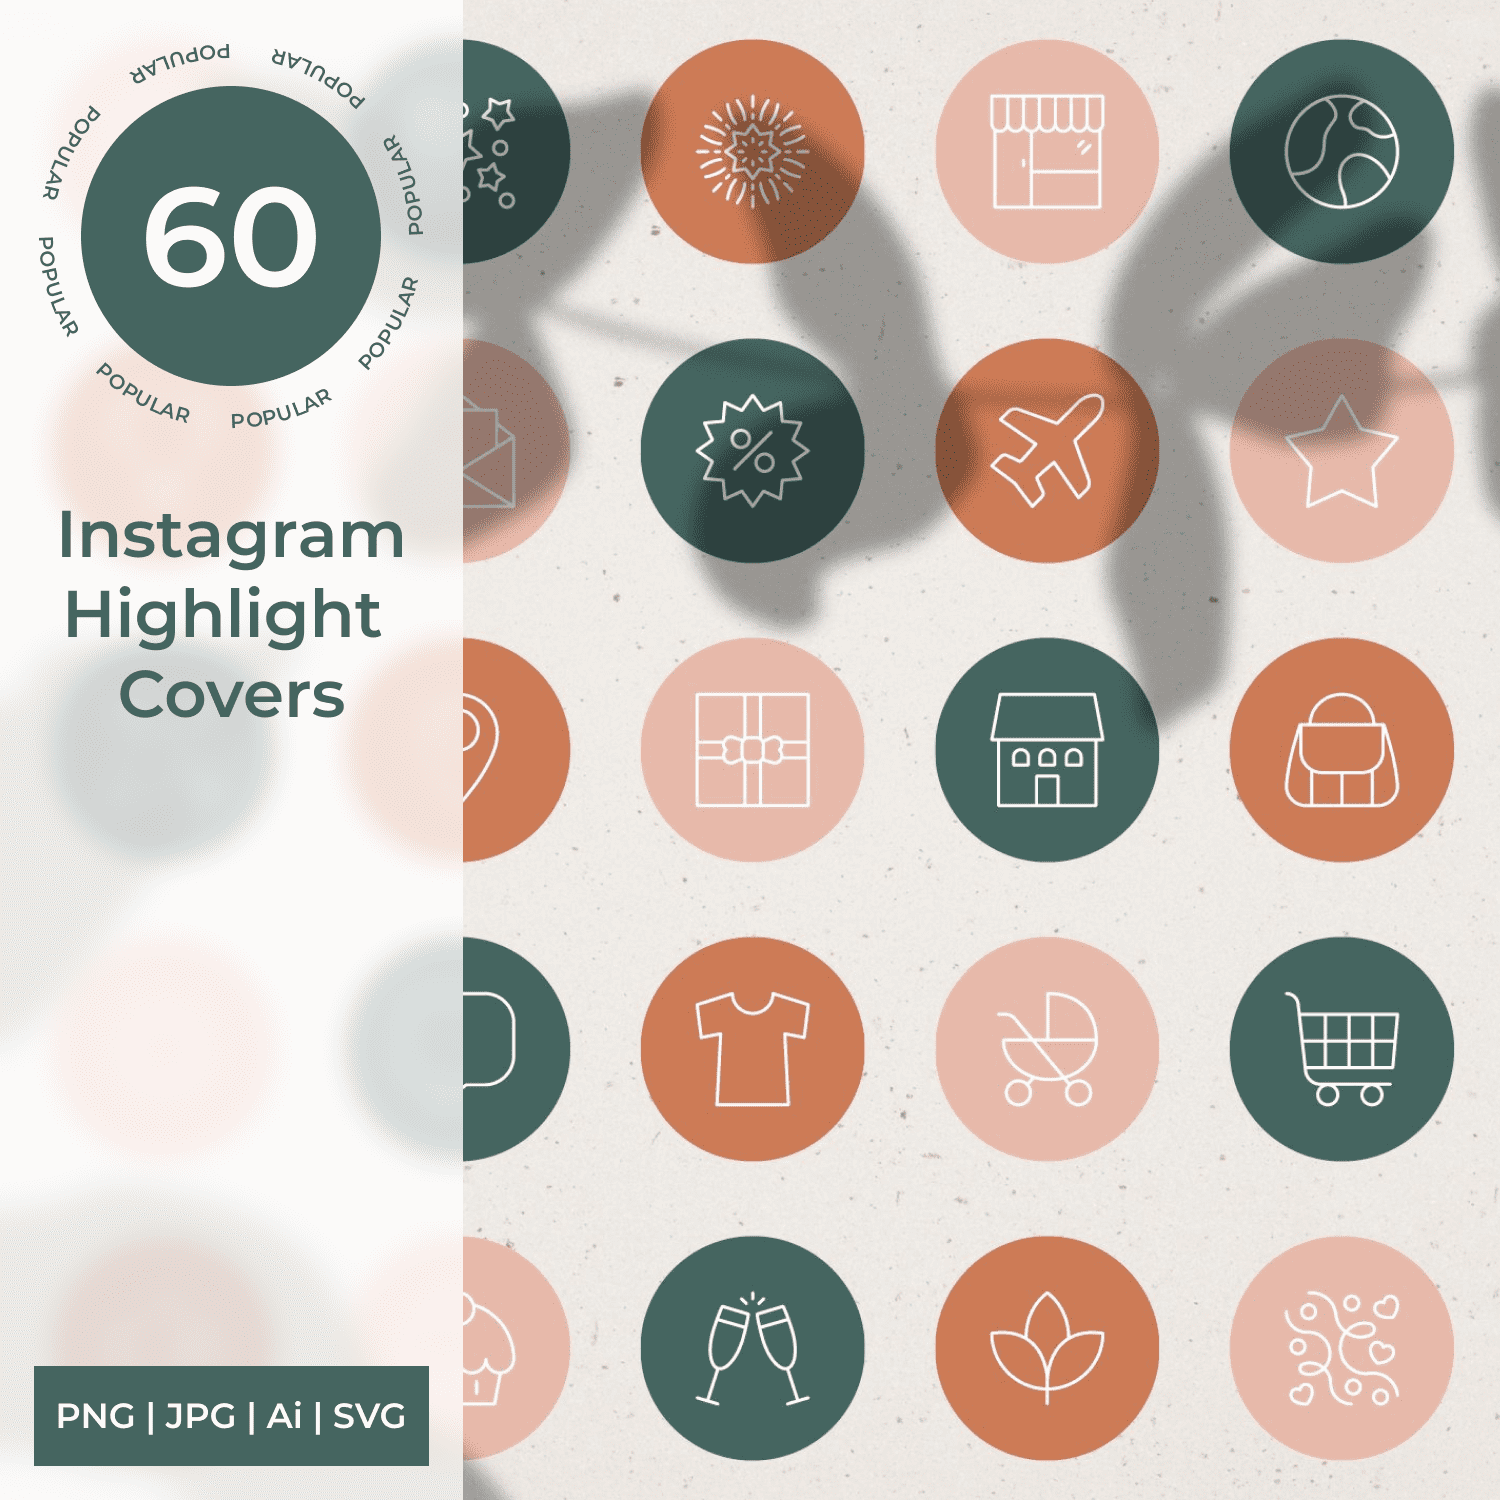 Popular Instagram Highlight Covers.